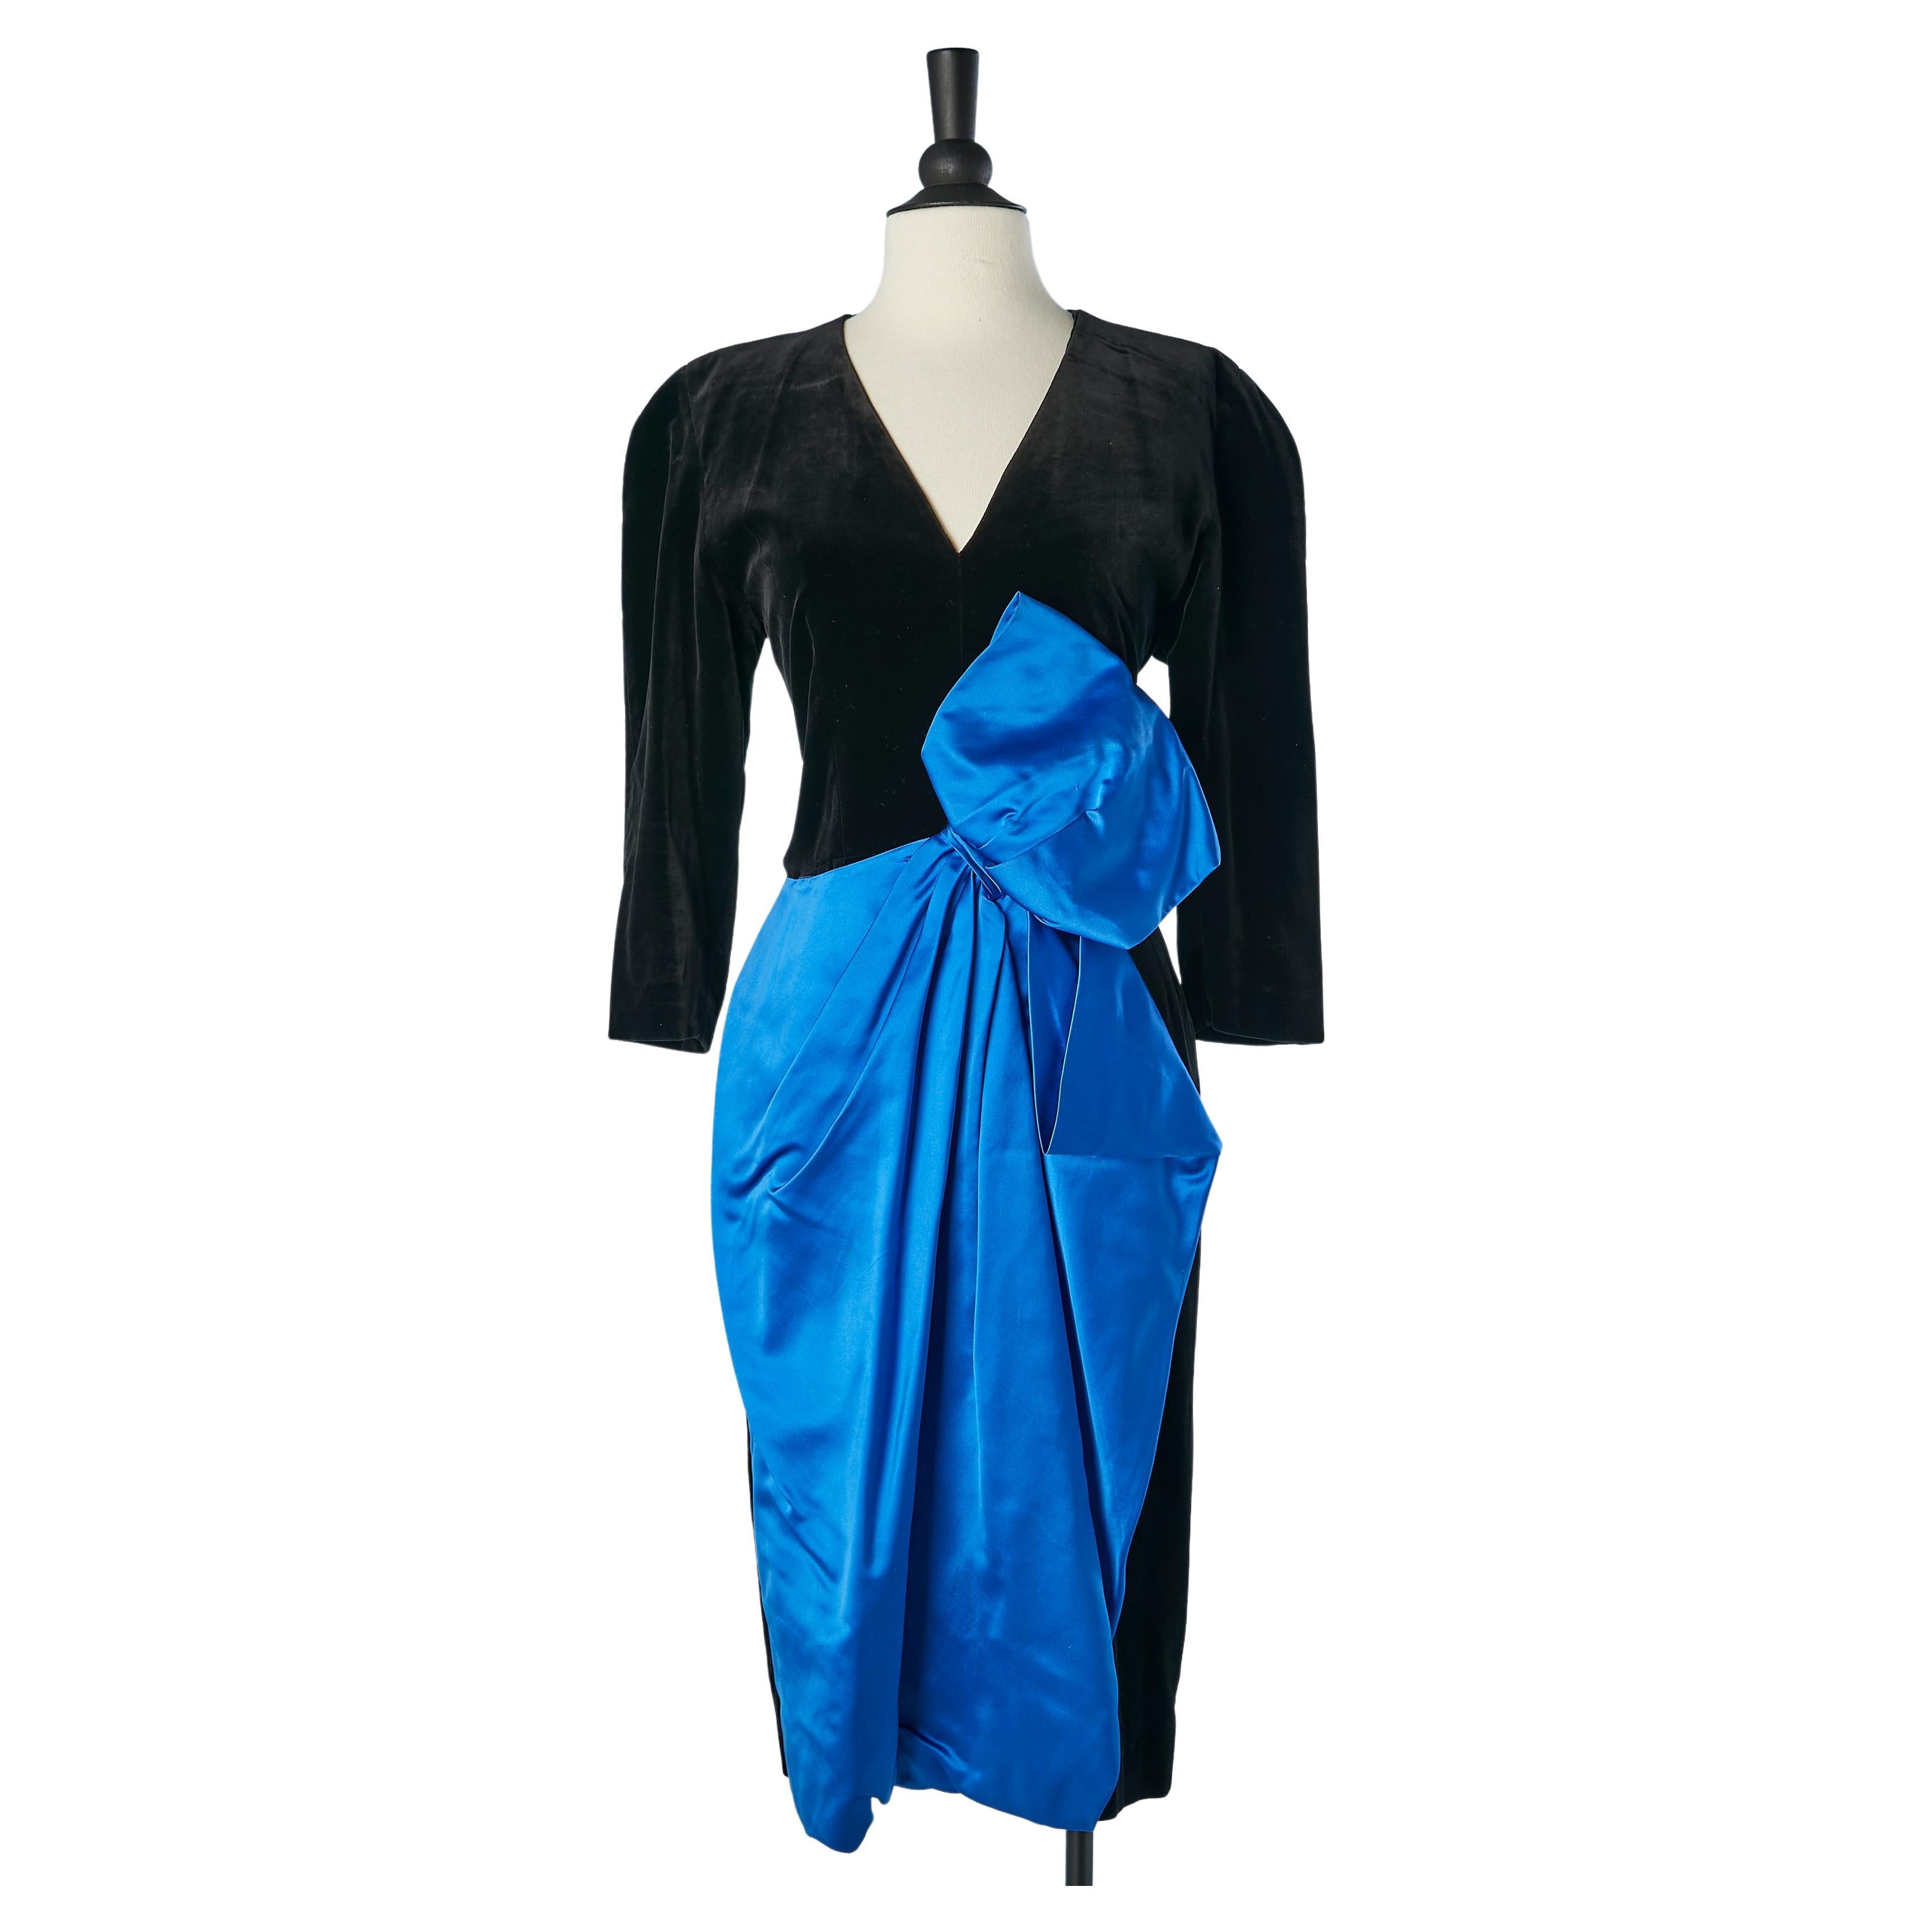 Black velvet cocktail dress with blue satin bow draped Guy Laroche Boutique  For Sale